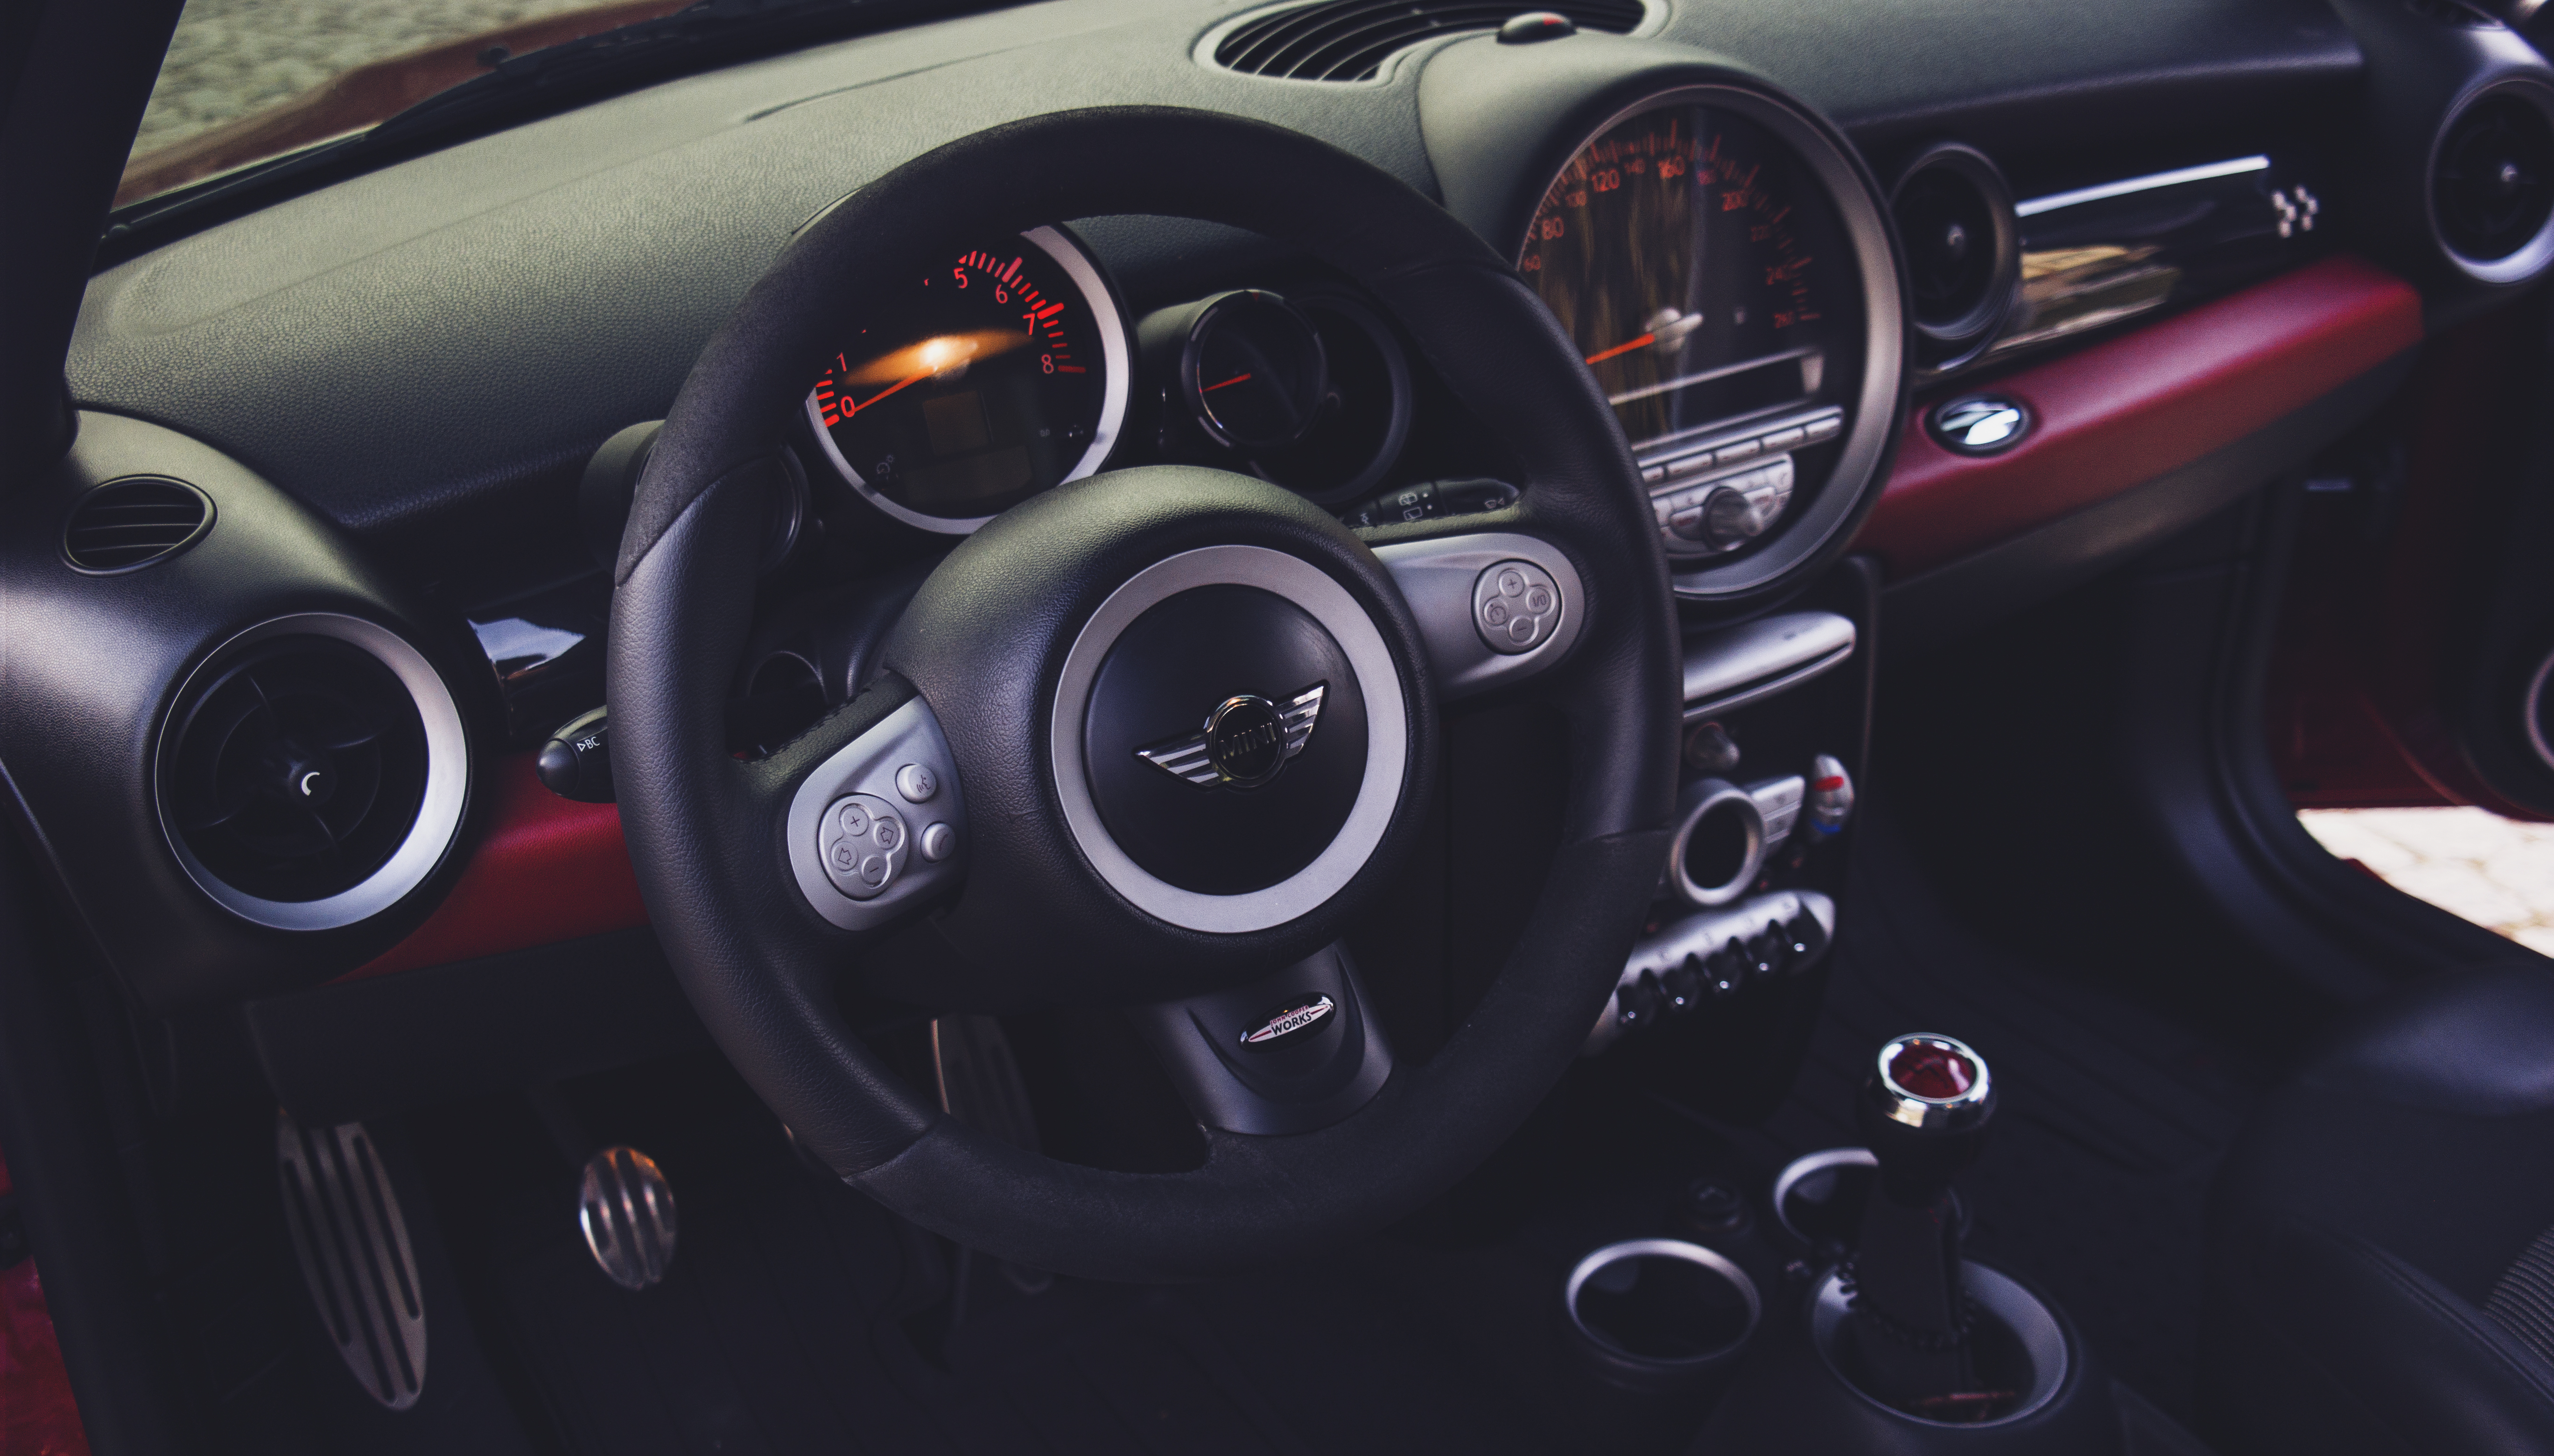 rudder, mini cooper, car interior, cars, steering wheel, vehicle interior 1080p